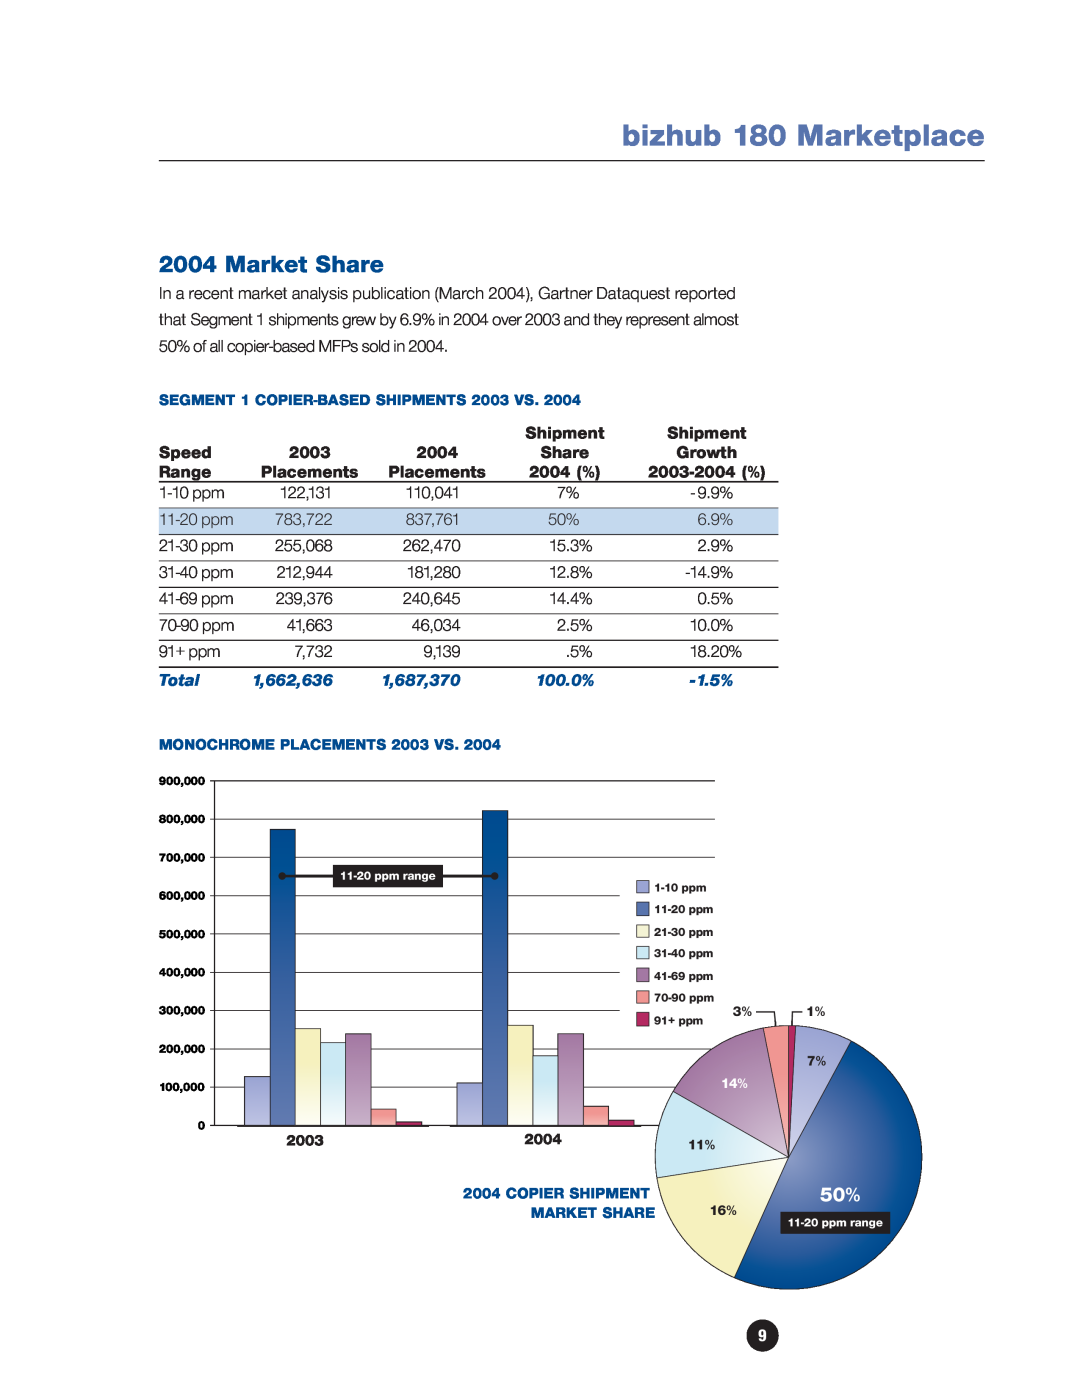 Konica Minolta manual bizhub 180 Marketplace, Market Share, Total, 1,662,636, 1,687,370, 100.0%, 1.5% 